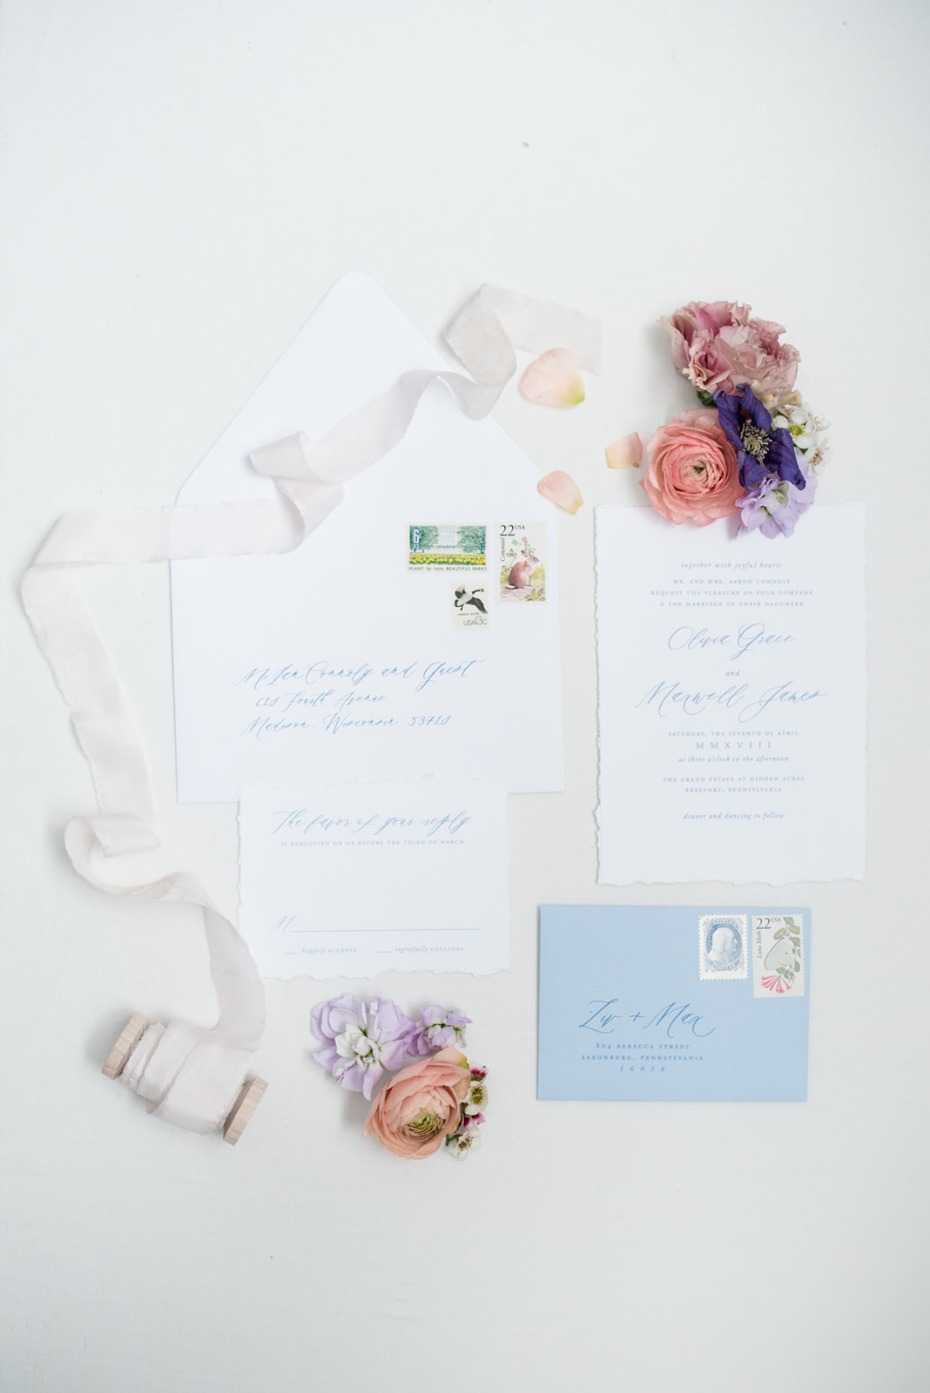 Blue and white wedding invites